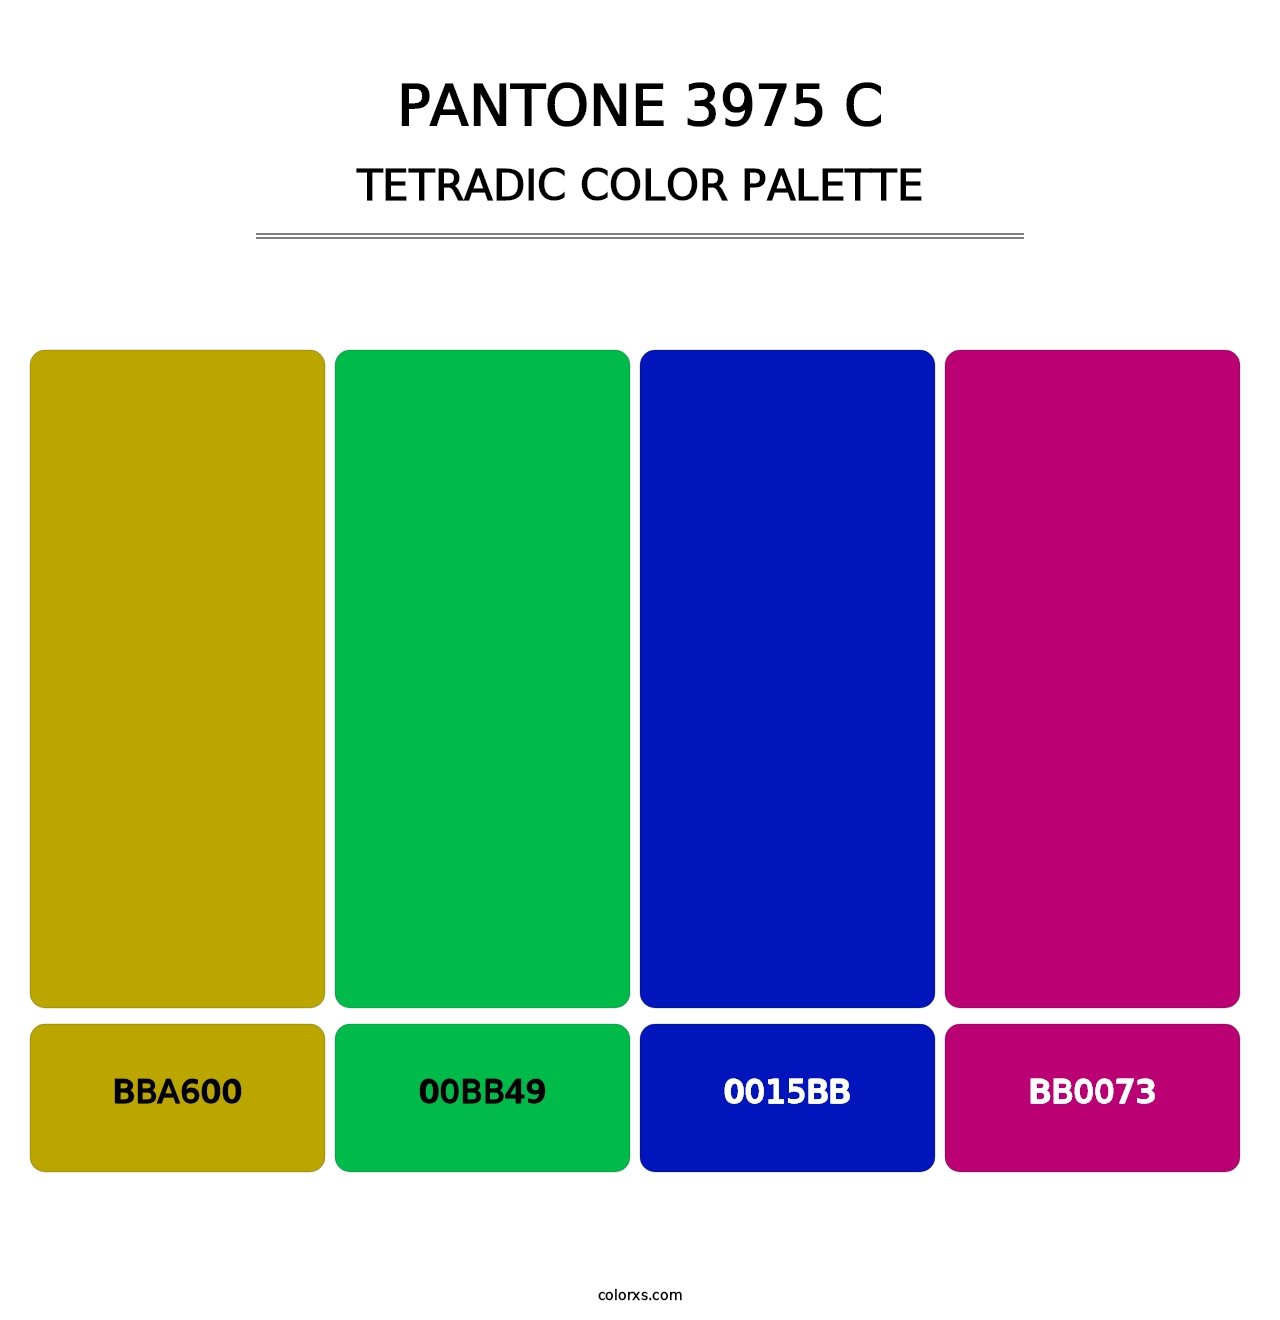 PANTONE 3975 C - Tetradic Color Palette